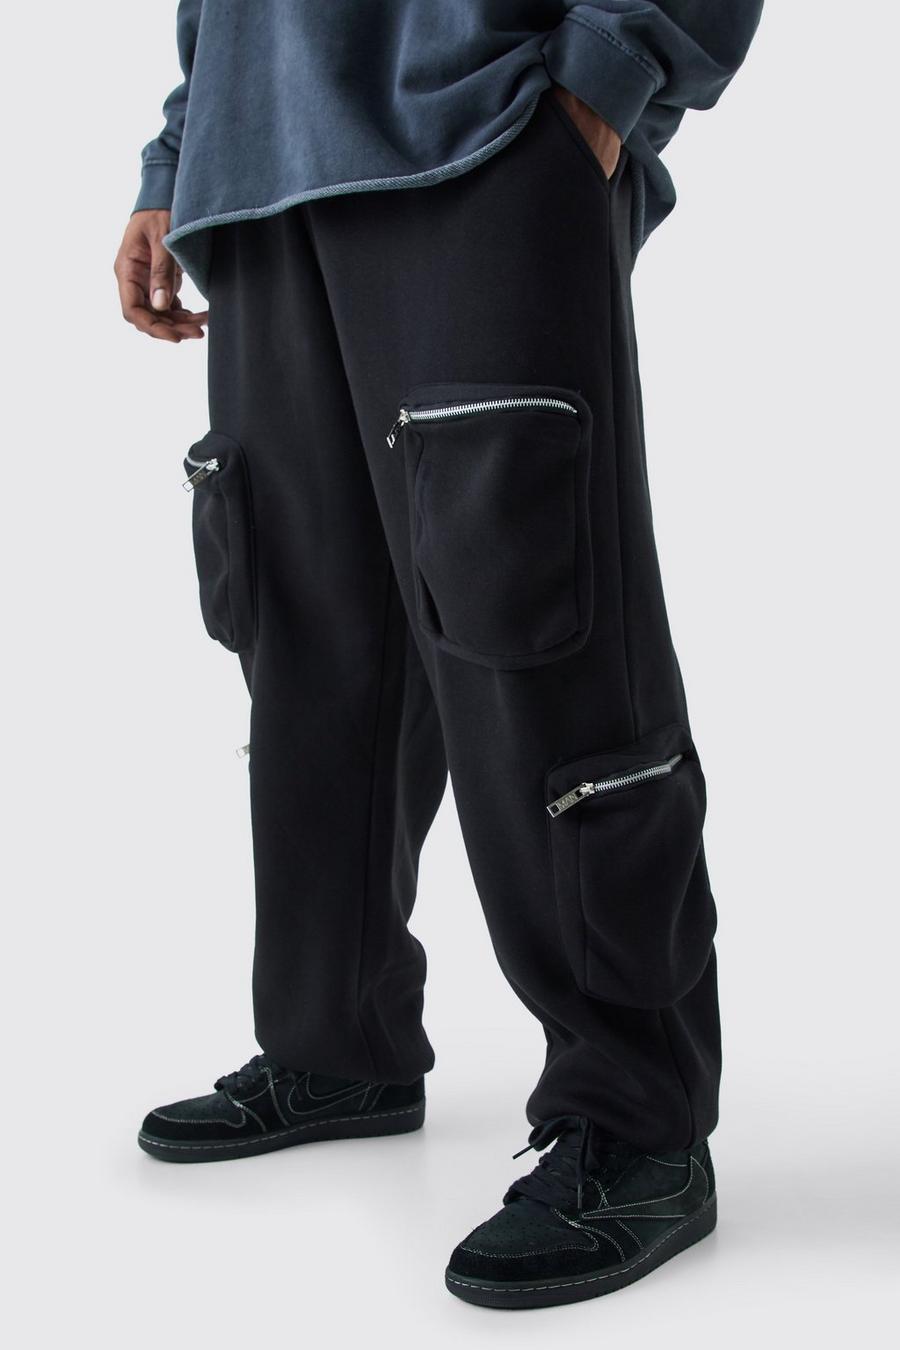 Pantaloni tuta Plus Size stile Utility Cargo, Black